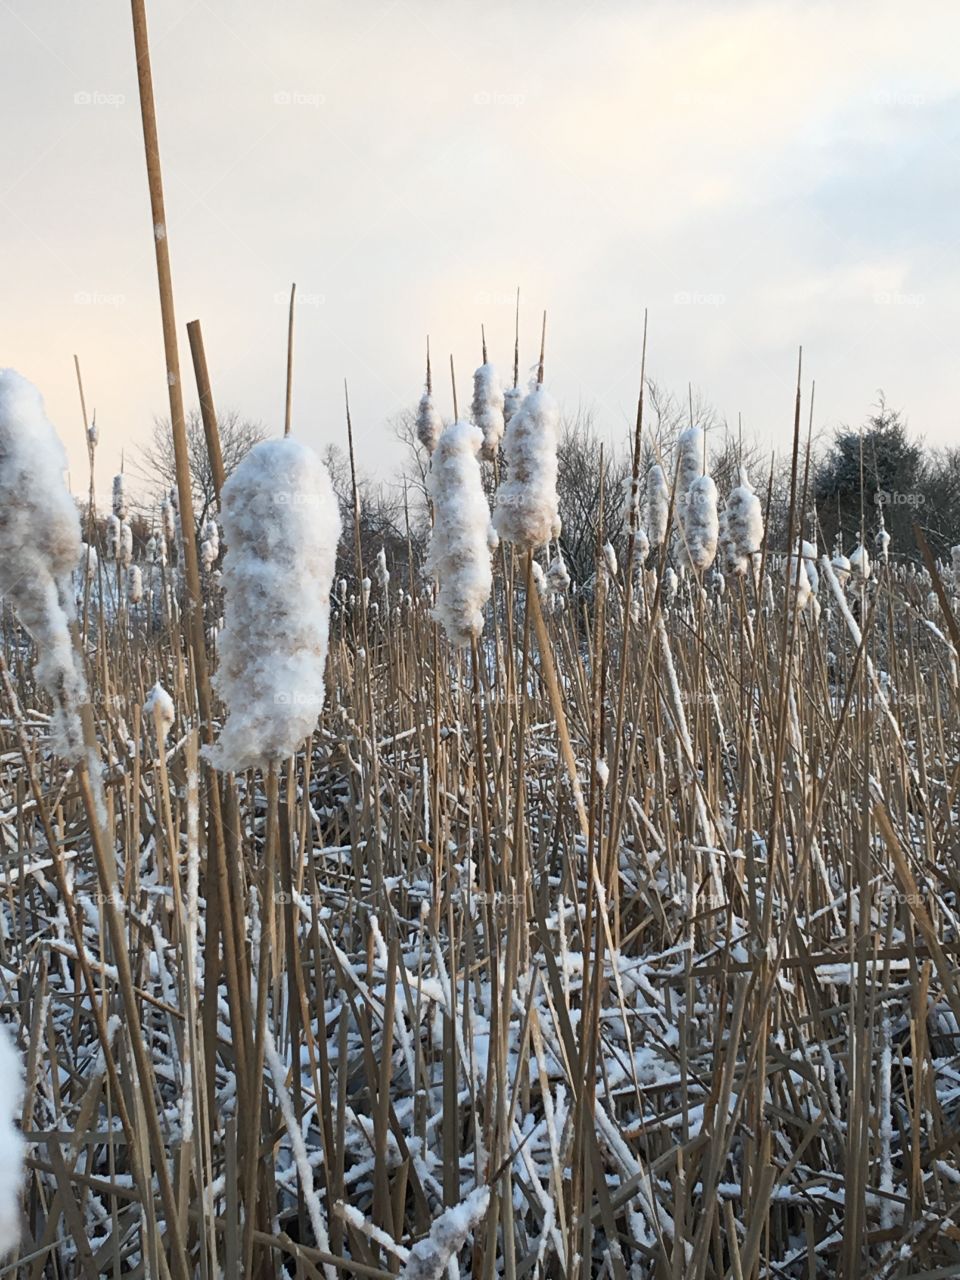 Snowy reeds